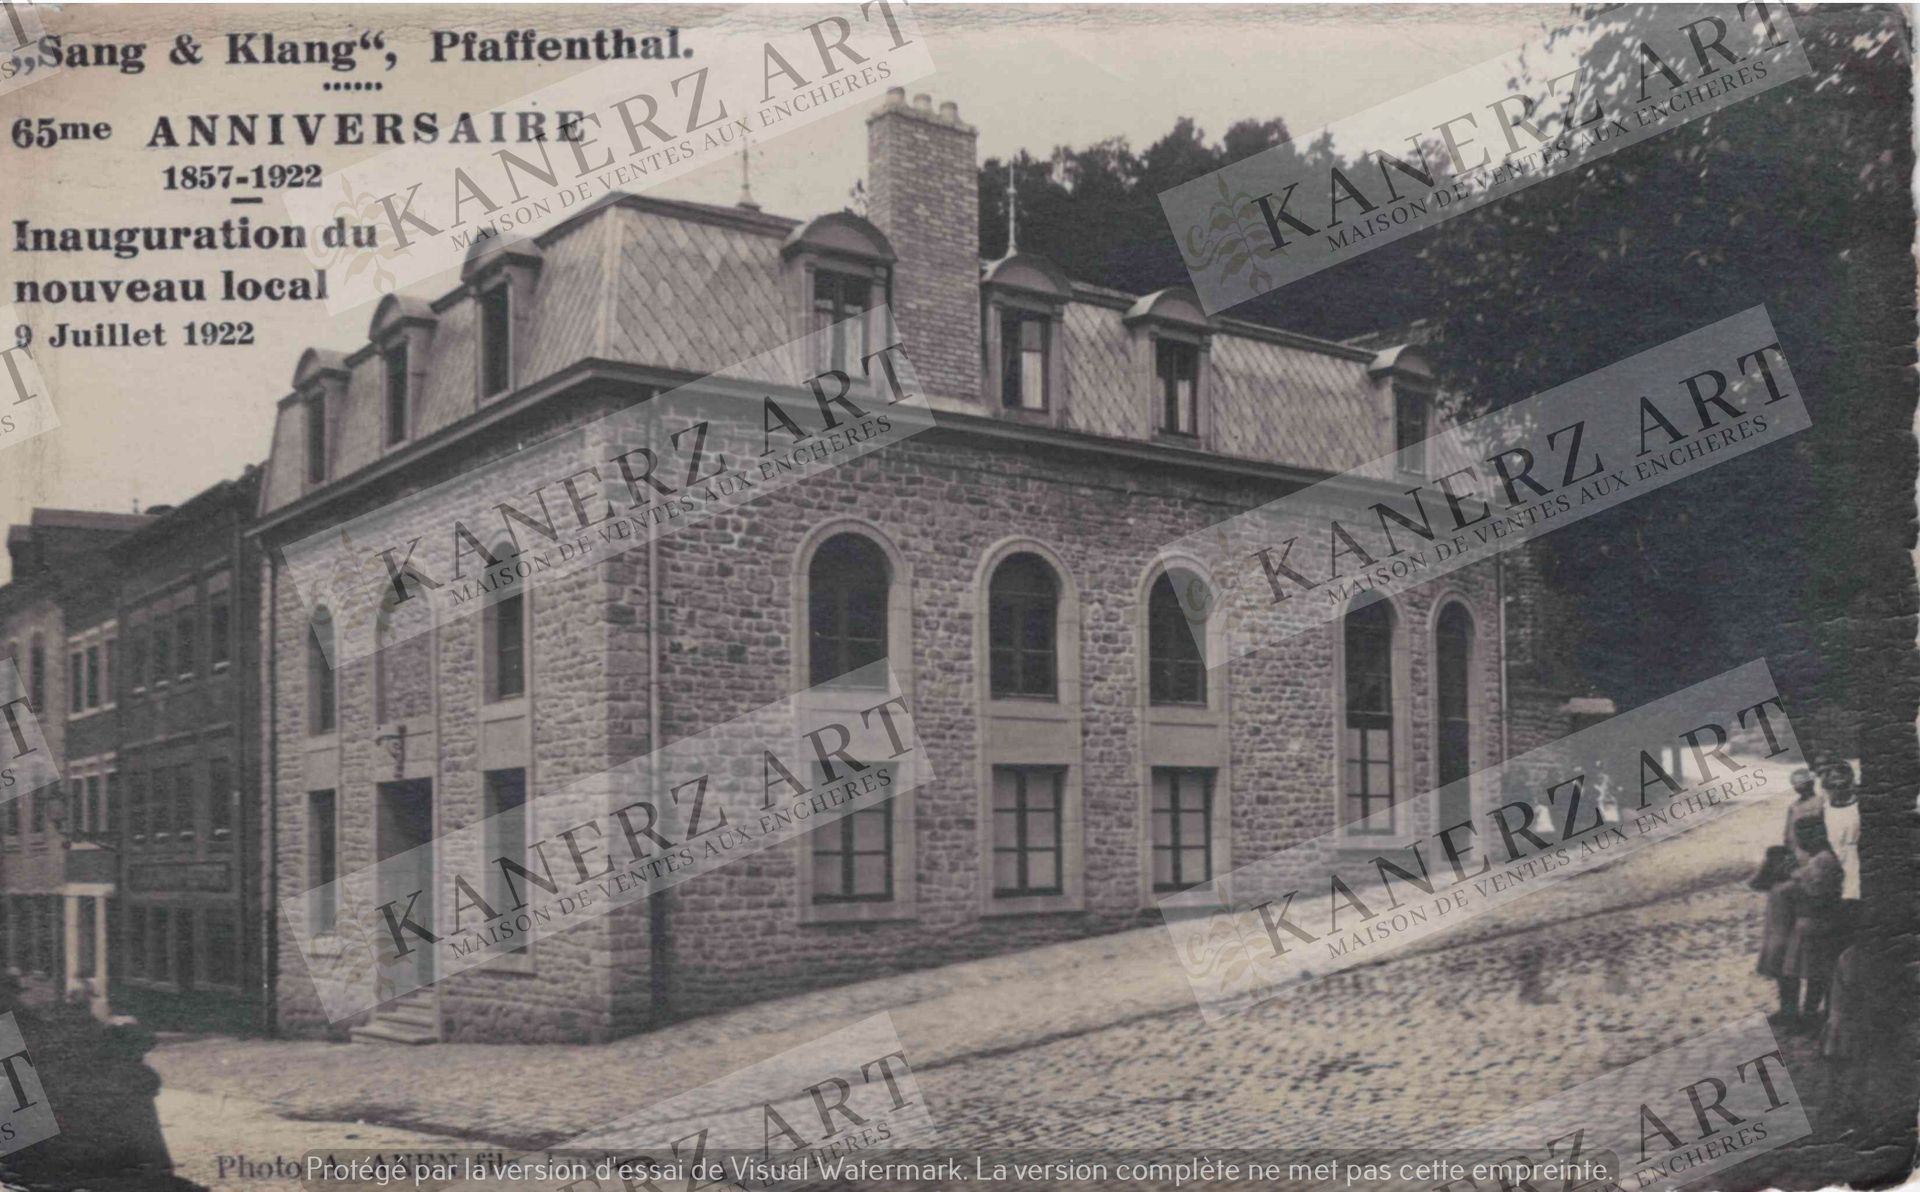 Null (官方）Pffafenthal - 照片卡 "Sang Klang"，1857-1922年65周年纪念，新房舍落成典礼，1922年7月9日，照片A. &hellip;